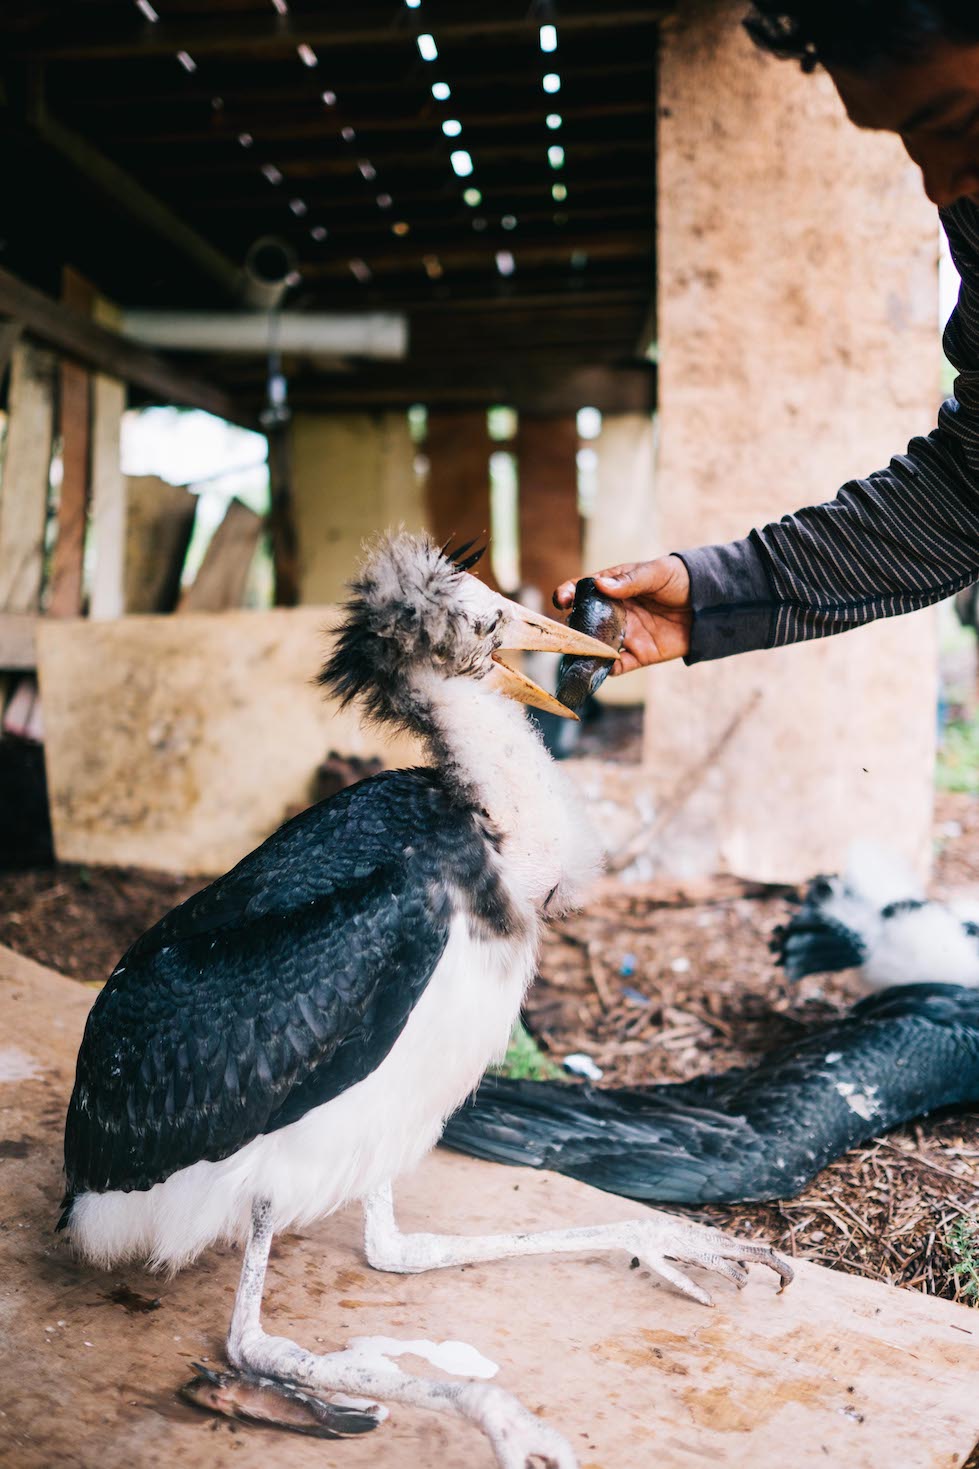 The Sumatra Merang Peatland Project saved a Storm’s Stork